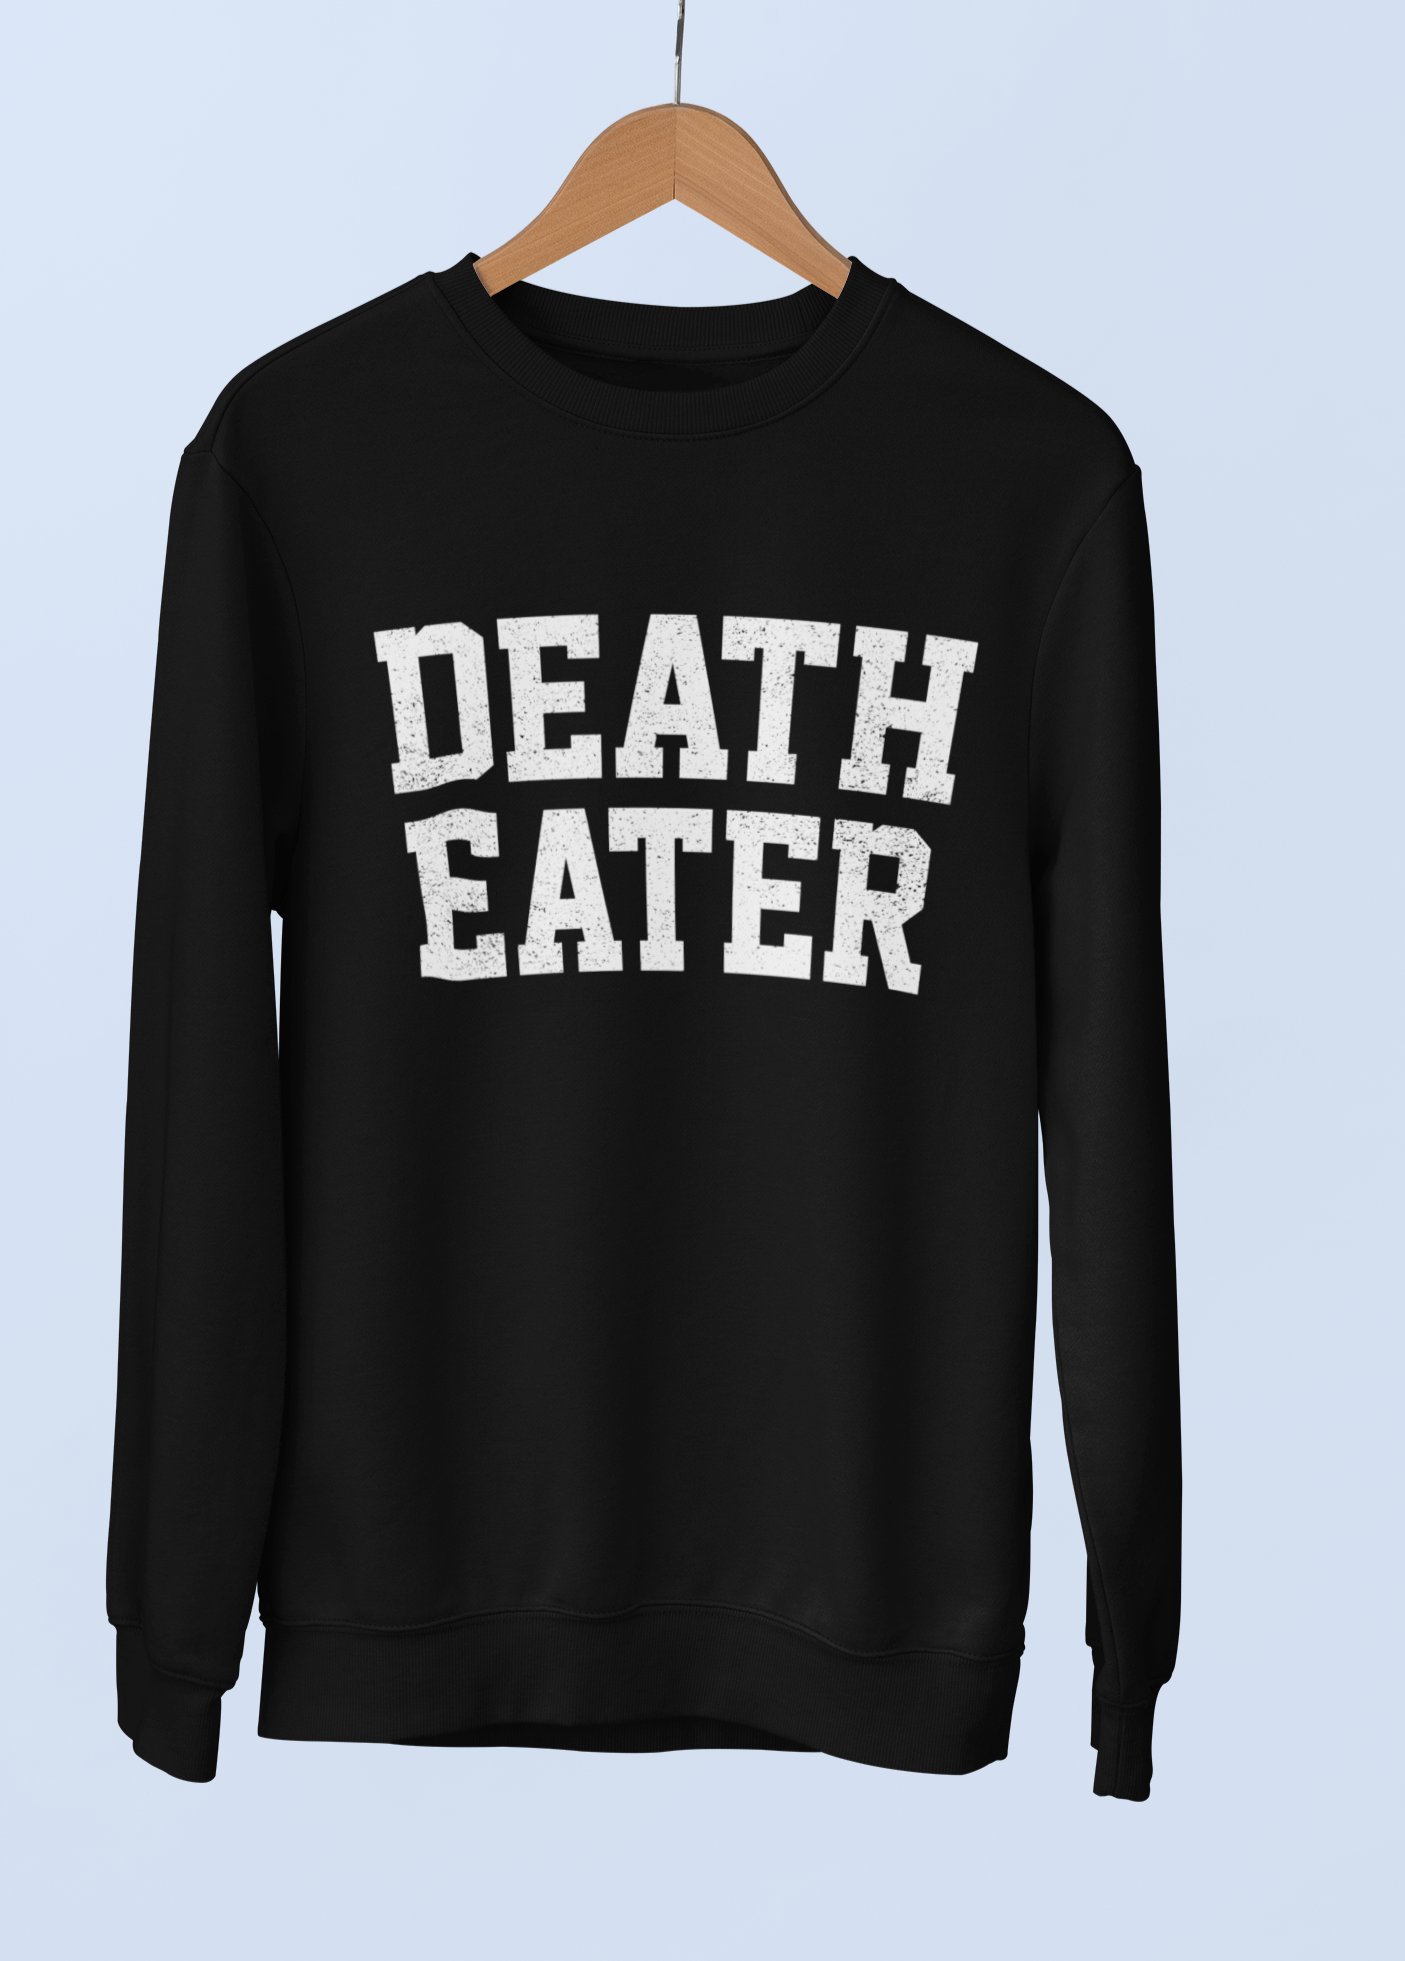 Black sweatshirt saying death eater - HighCiti